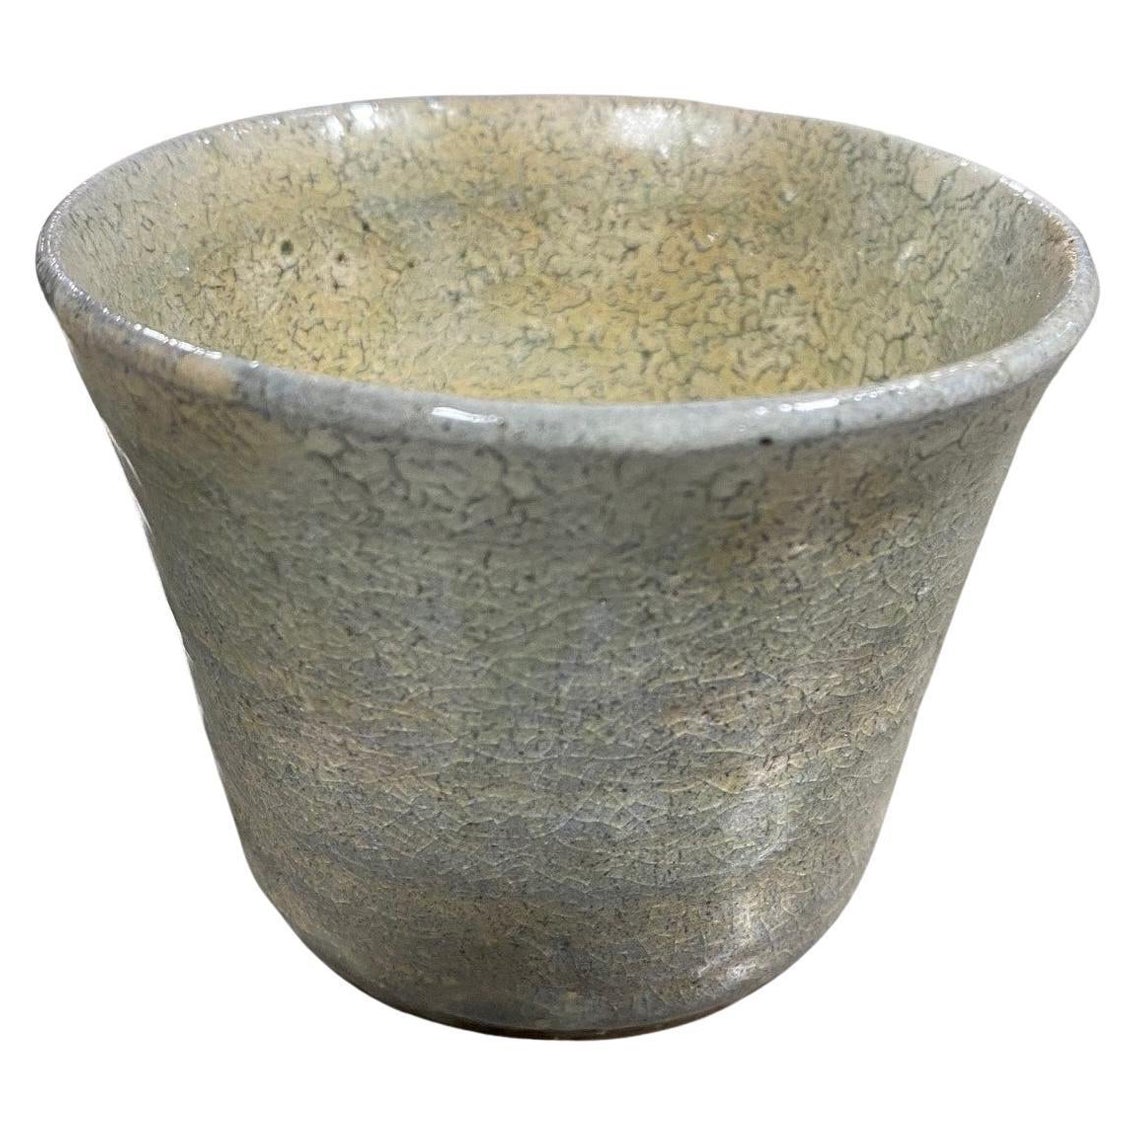 Japanese Asian Signed Glazed Pottery Ceramic Folk Art Wabi-Sabi Yunomi Teacup For Sale